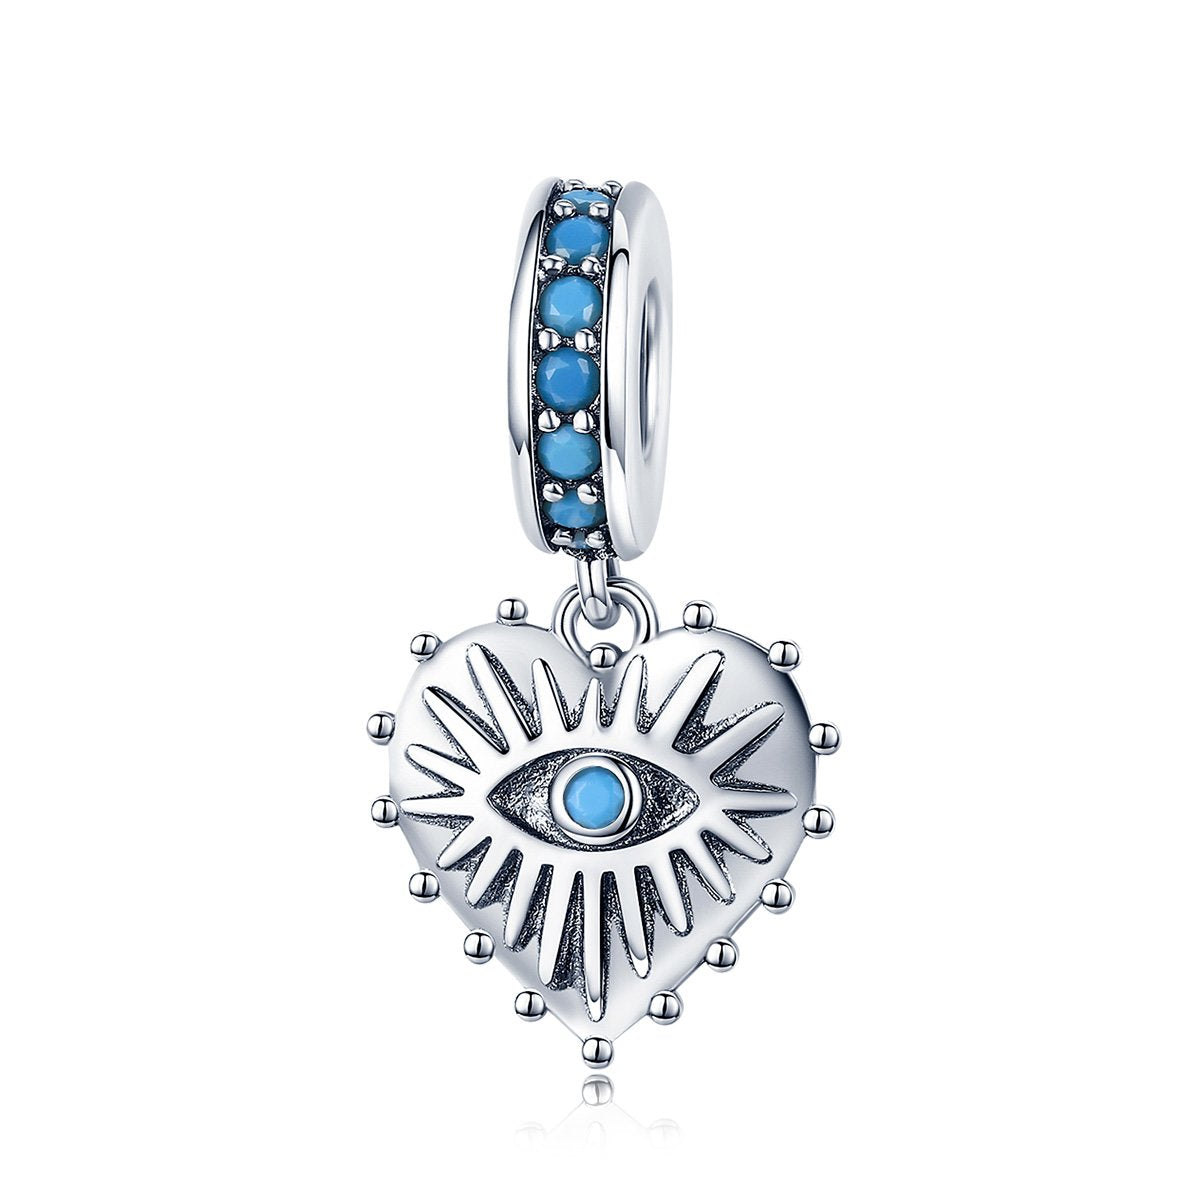 Sterling 925 silver charm the blue devil eye pendant fits Pandora charm and European charm bracelet Xaxe.com